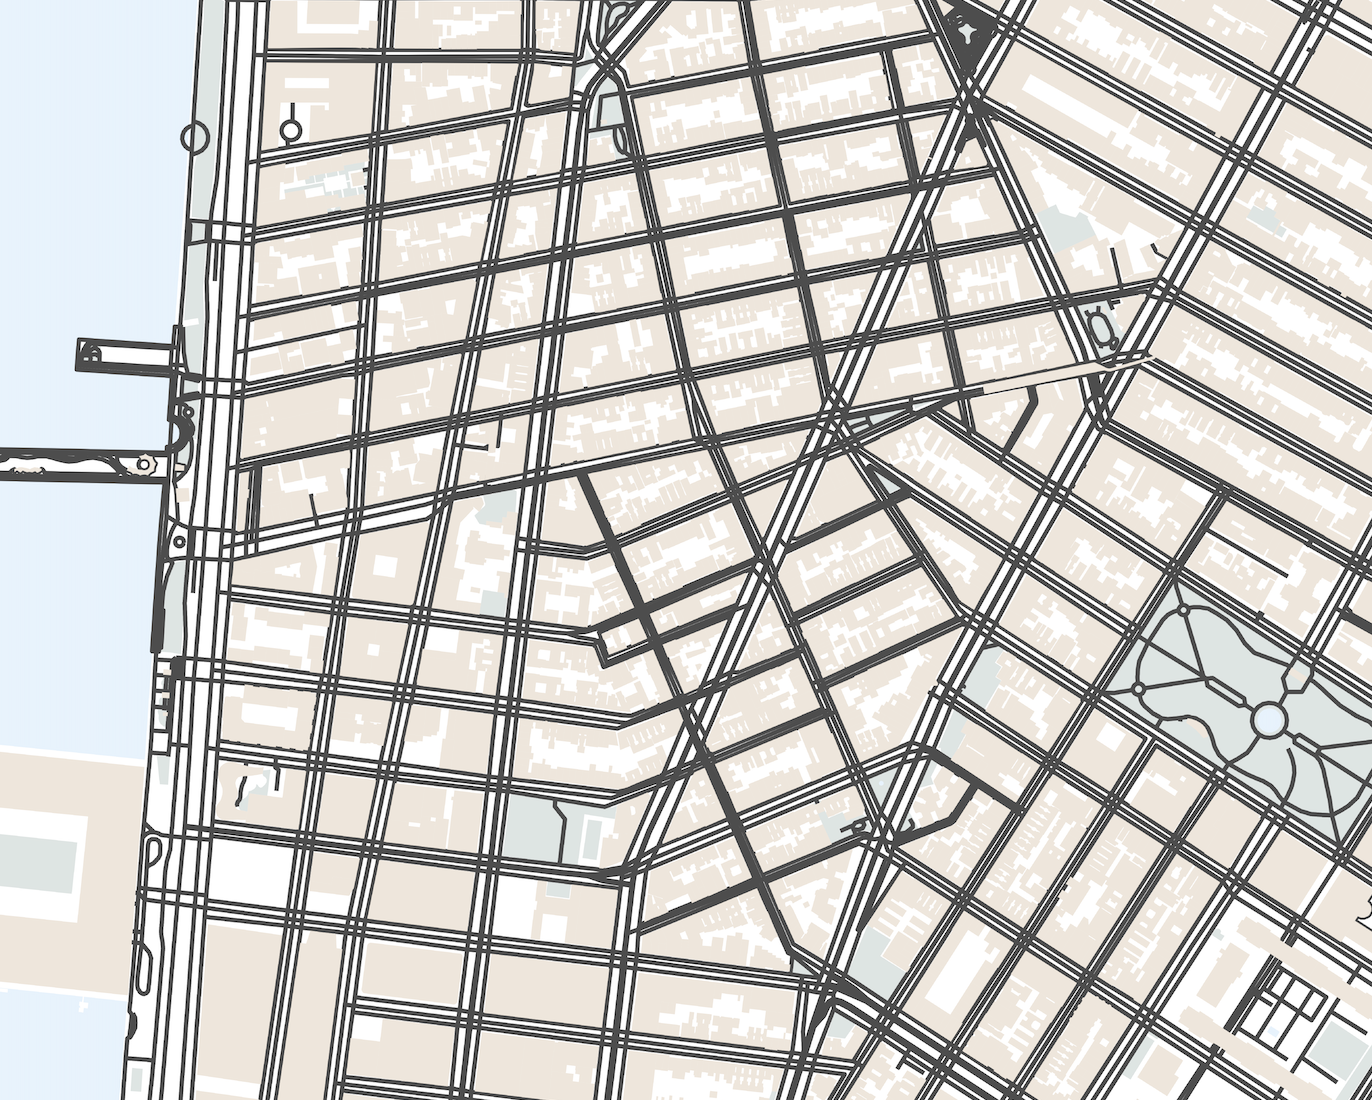 Greenwich Village Map Print